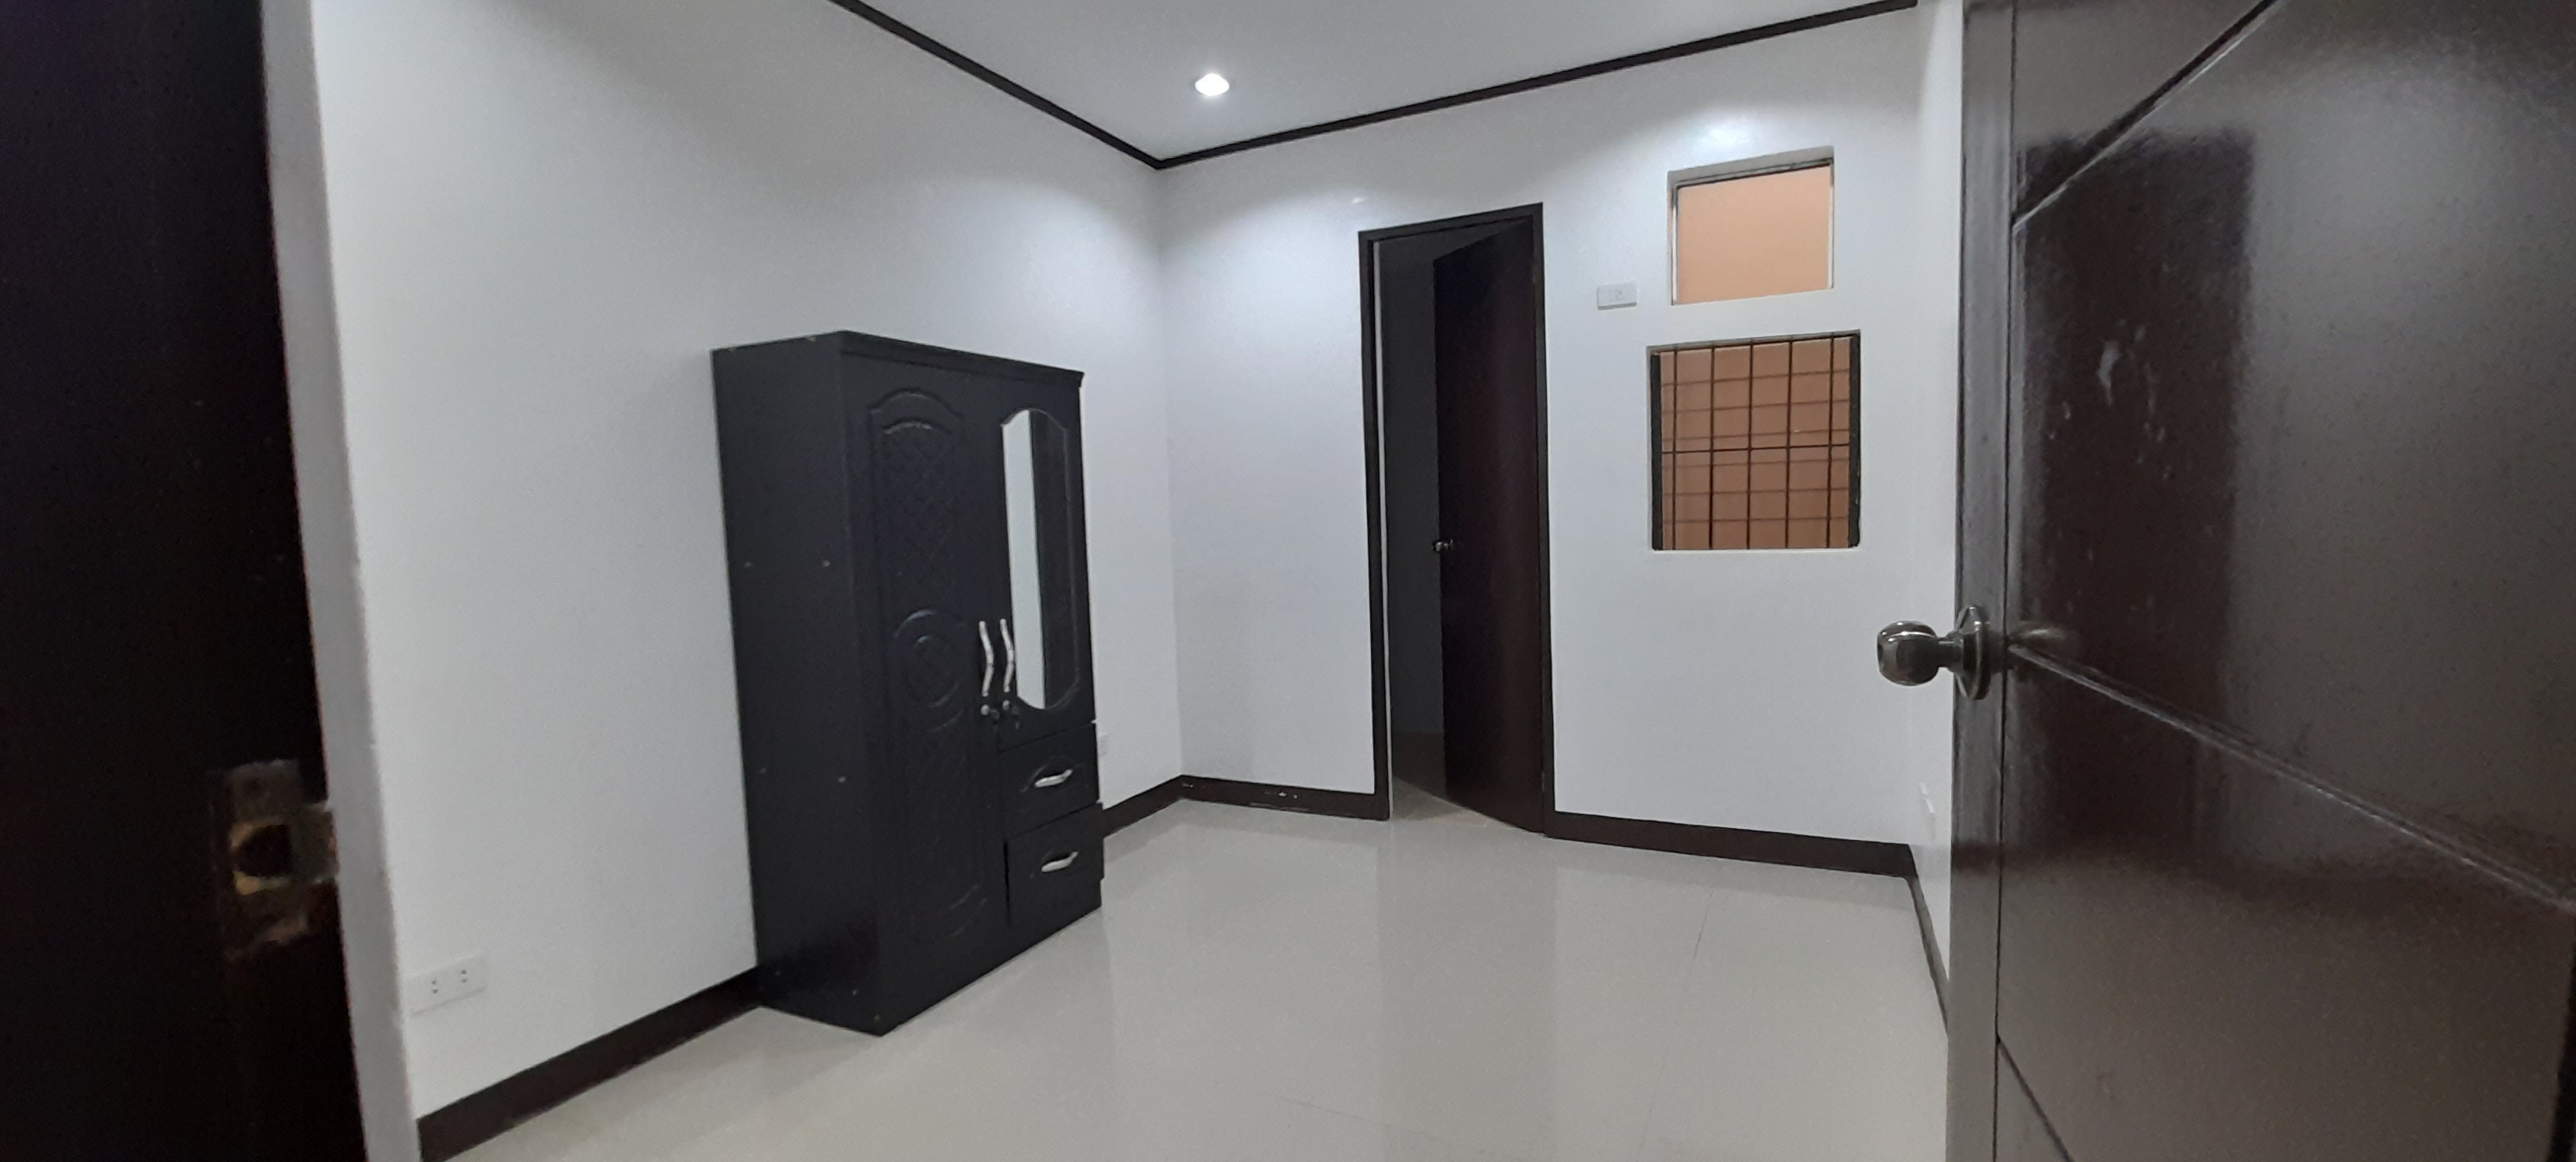 2-bedroom-unfurnished-apartment-in-casuntingan-mandaue-city